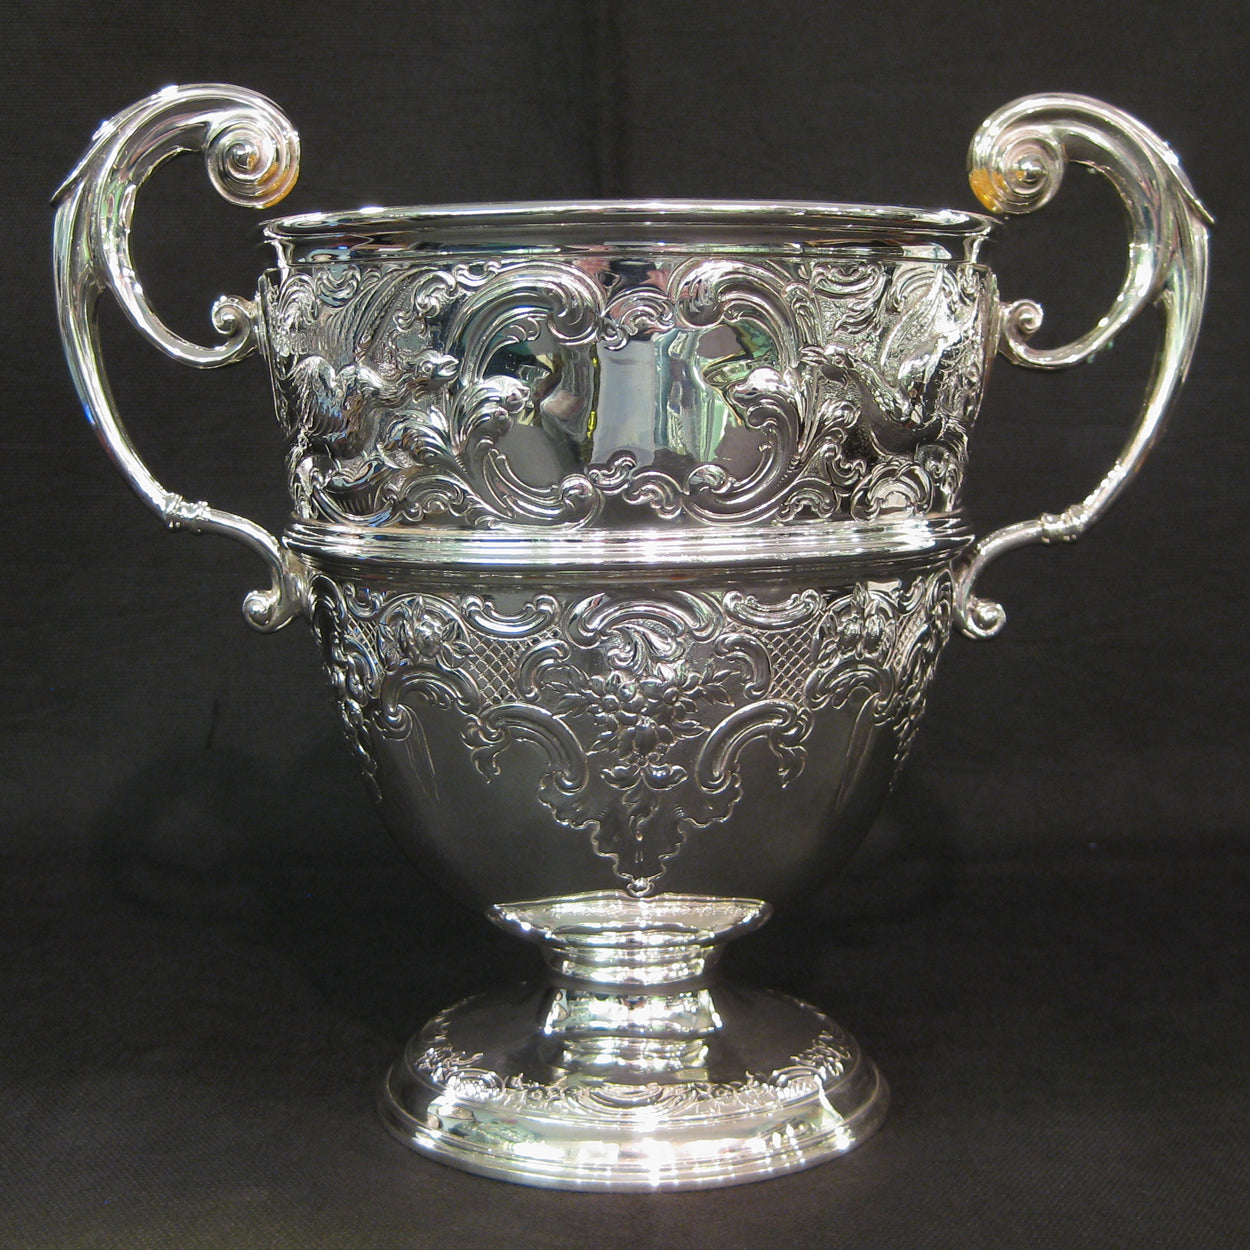 High Quality silver trophy